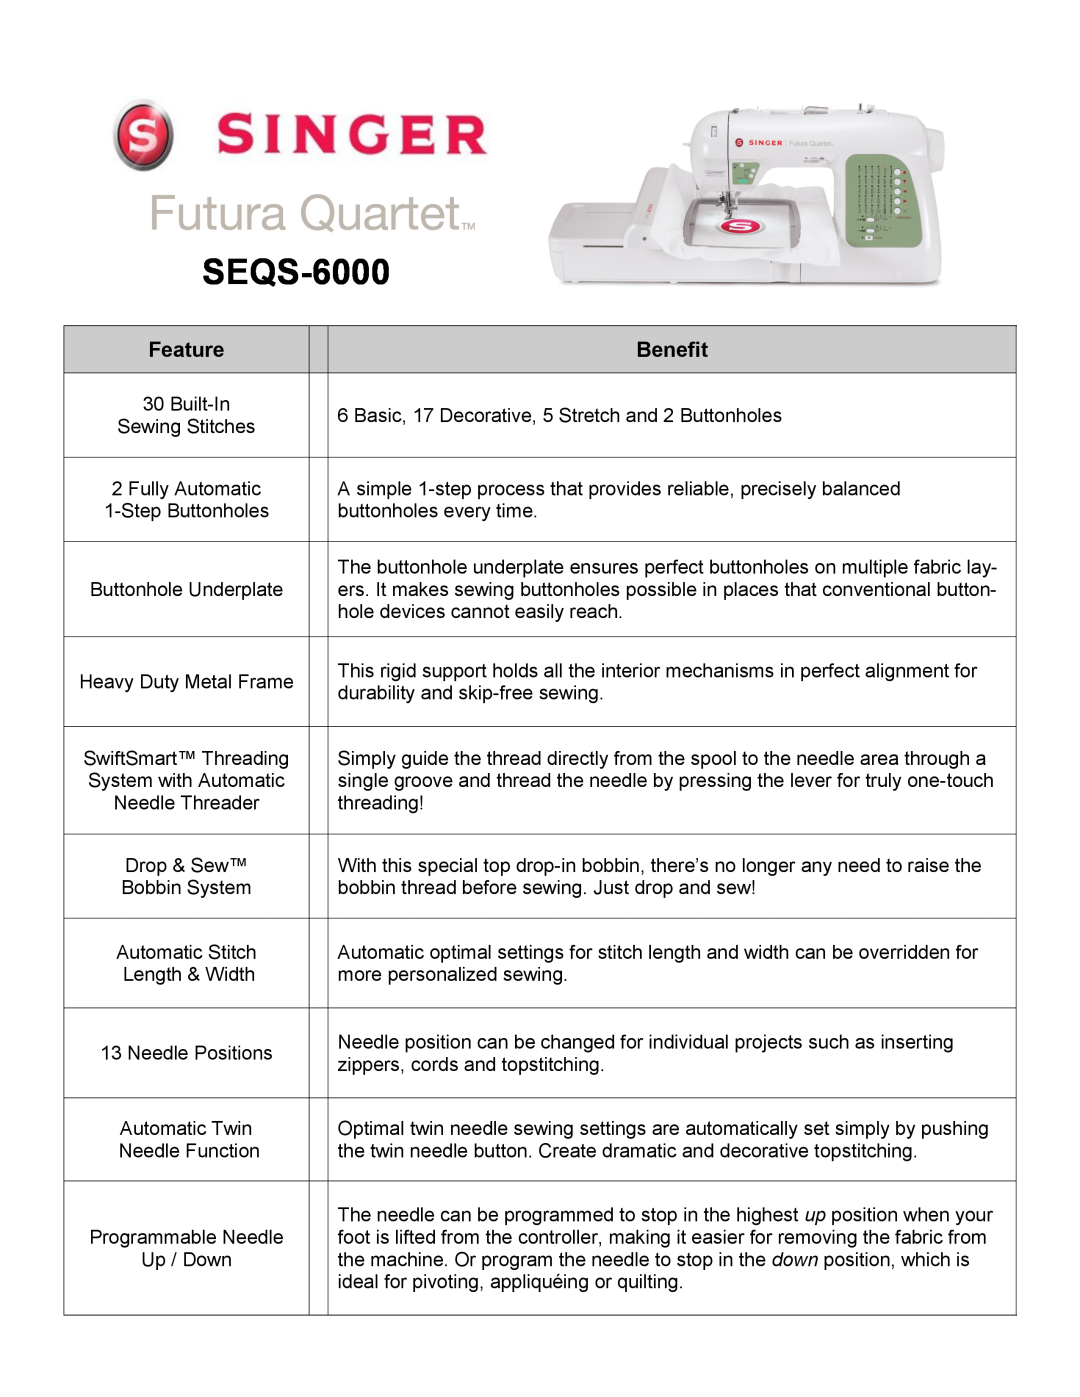 Singer SEQS-6000 manual Feature, Benefit, SwiftSmart 